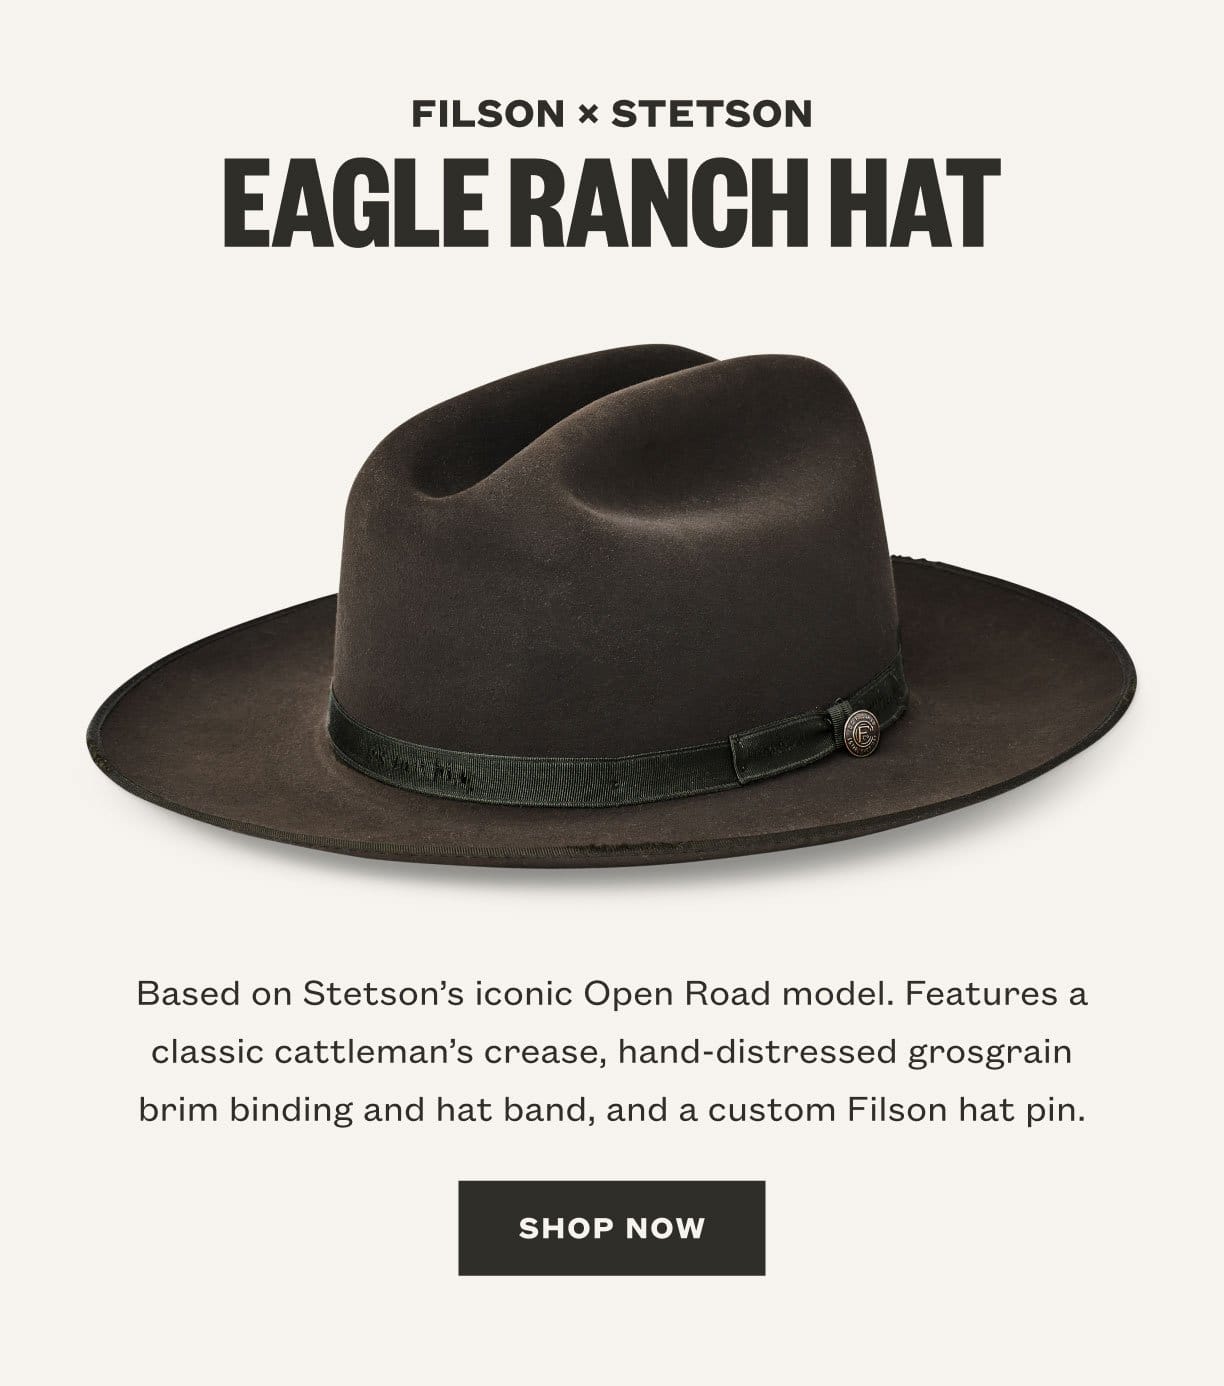 Eagle Ranch Hat